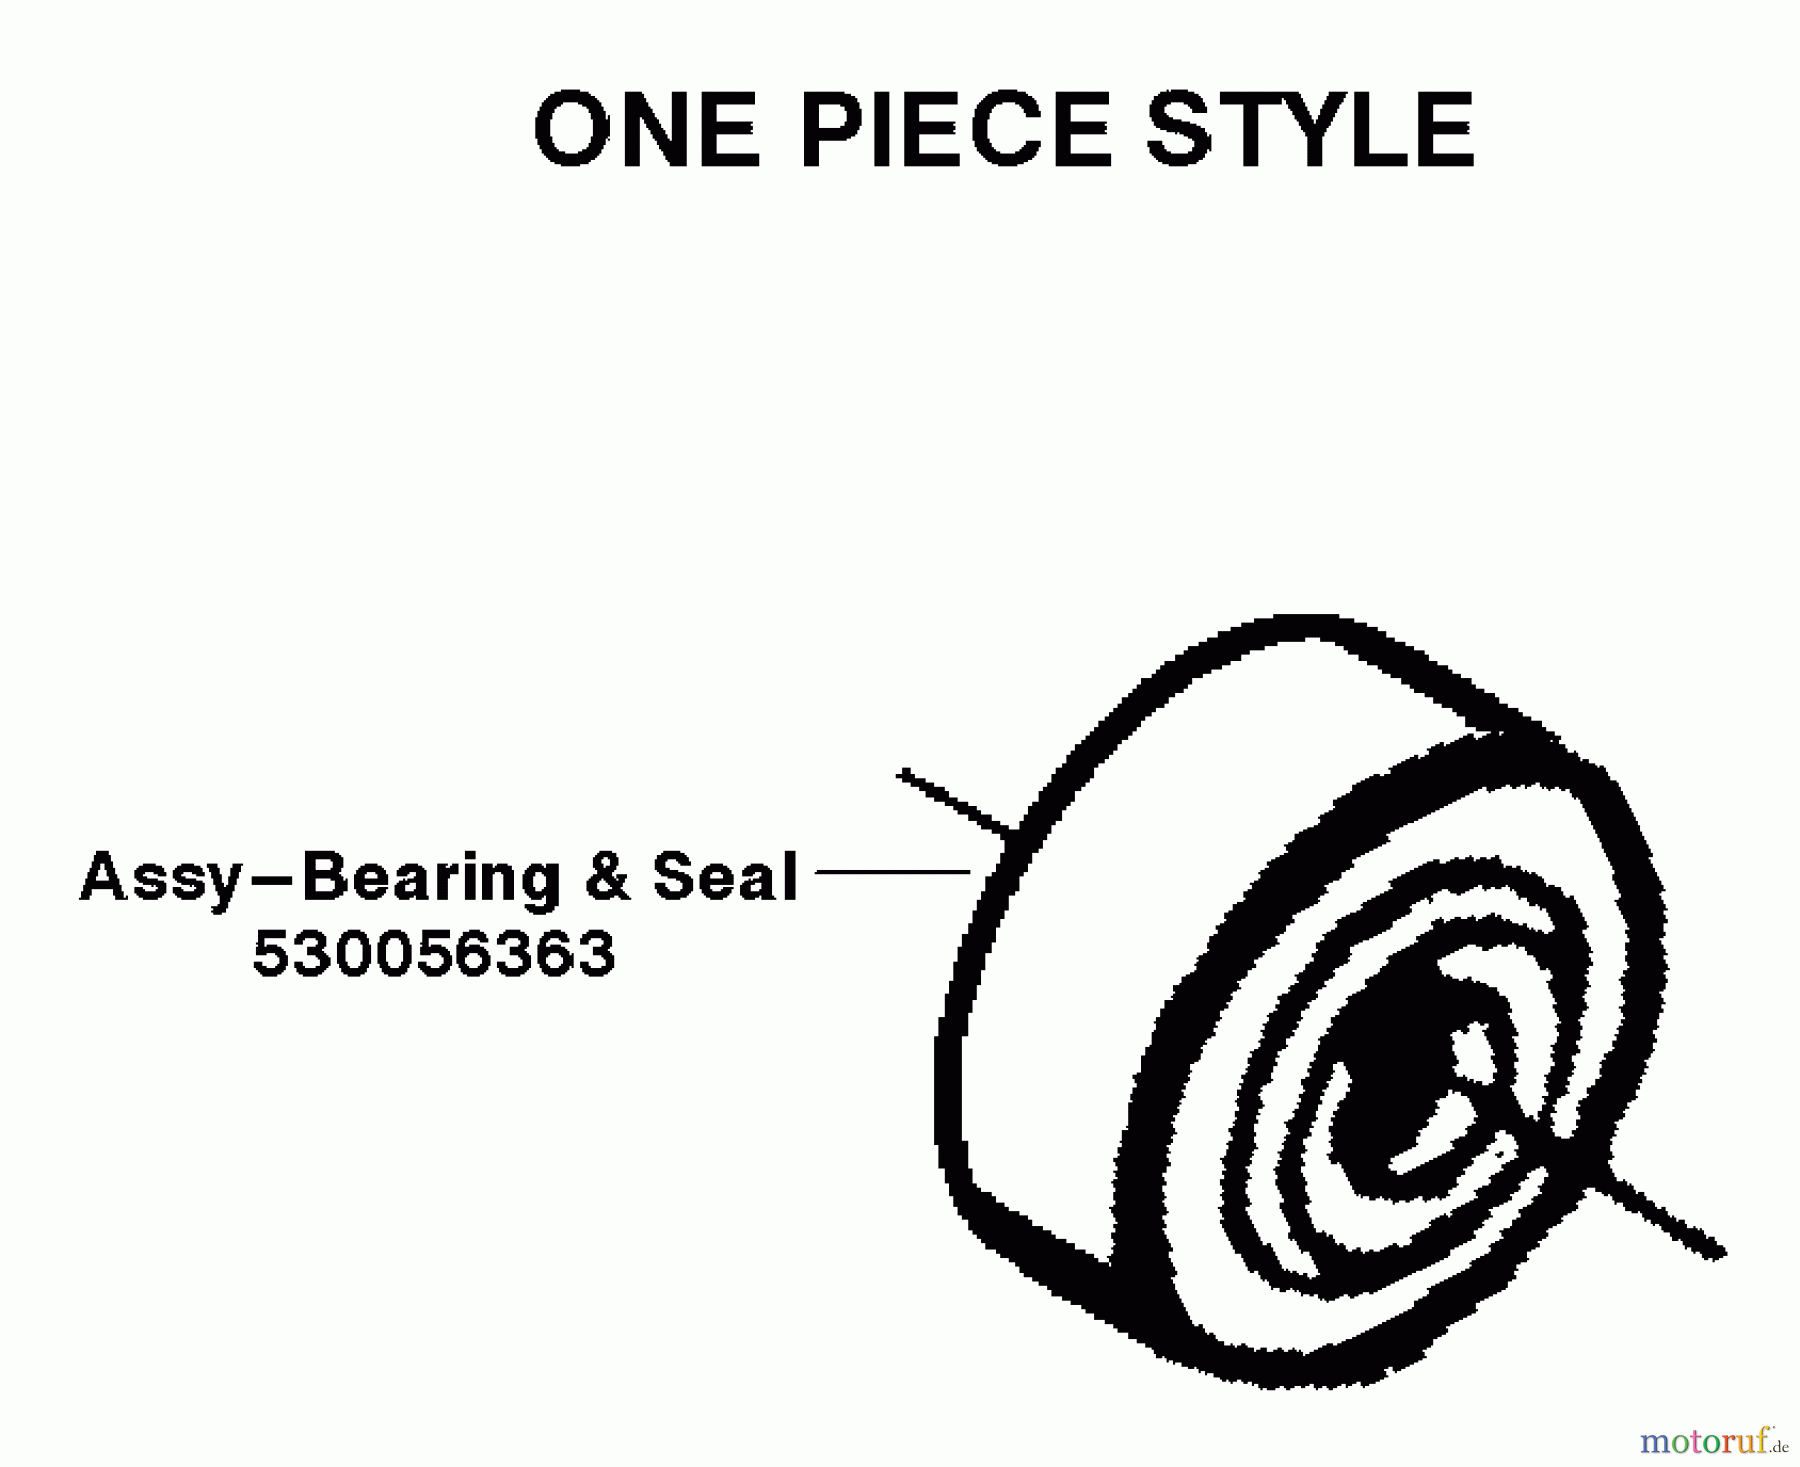  Poulan / Weed Eater Motorsägen 2775 (Type 3) - Poulan Chainsaw Bearing & Seal - One Piece Style